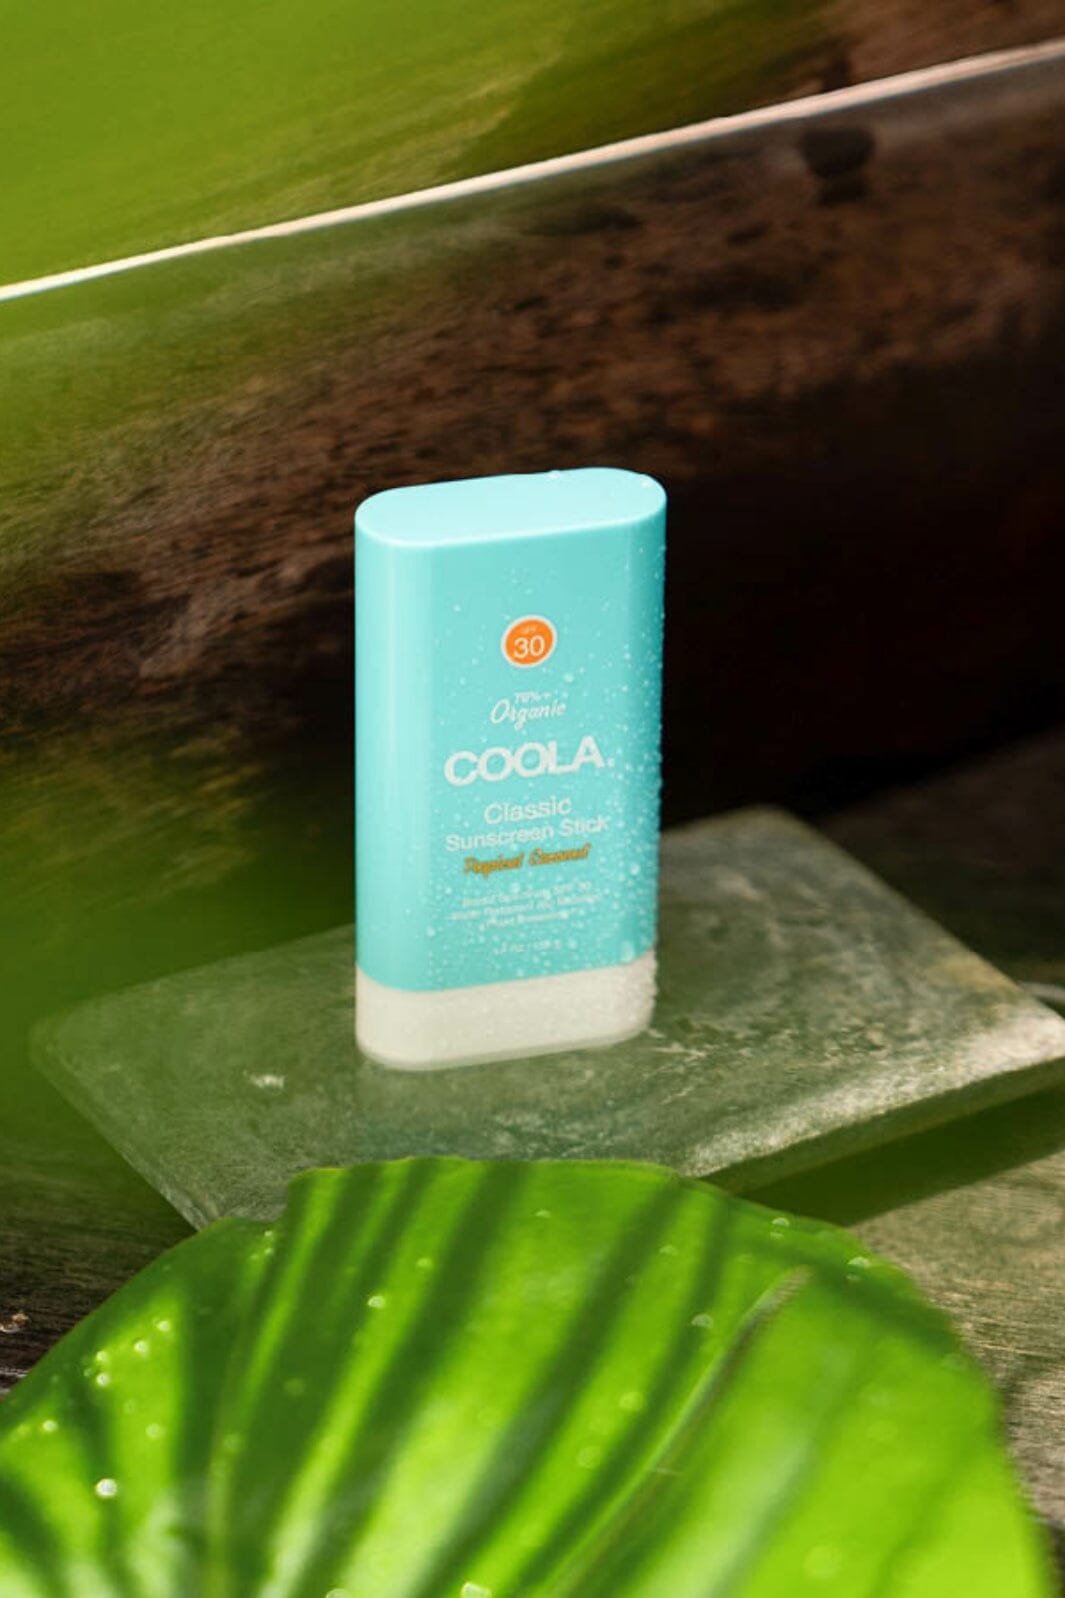 Coola - Classic Sunscreen Stick Tropical Coconut SPF 30 Hudpleje 